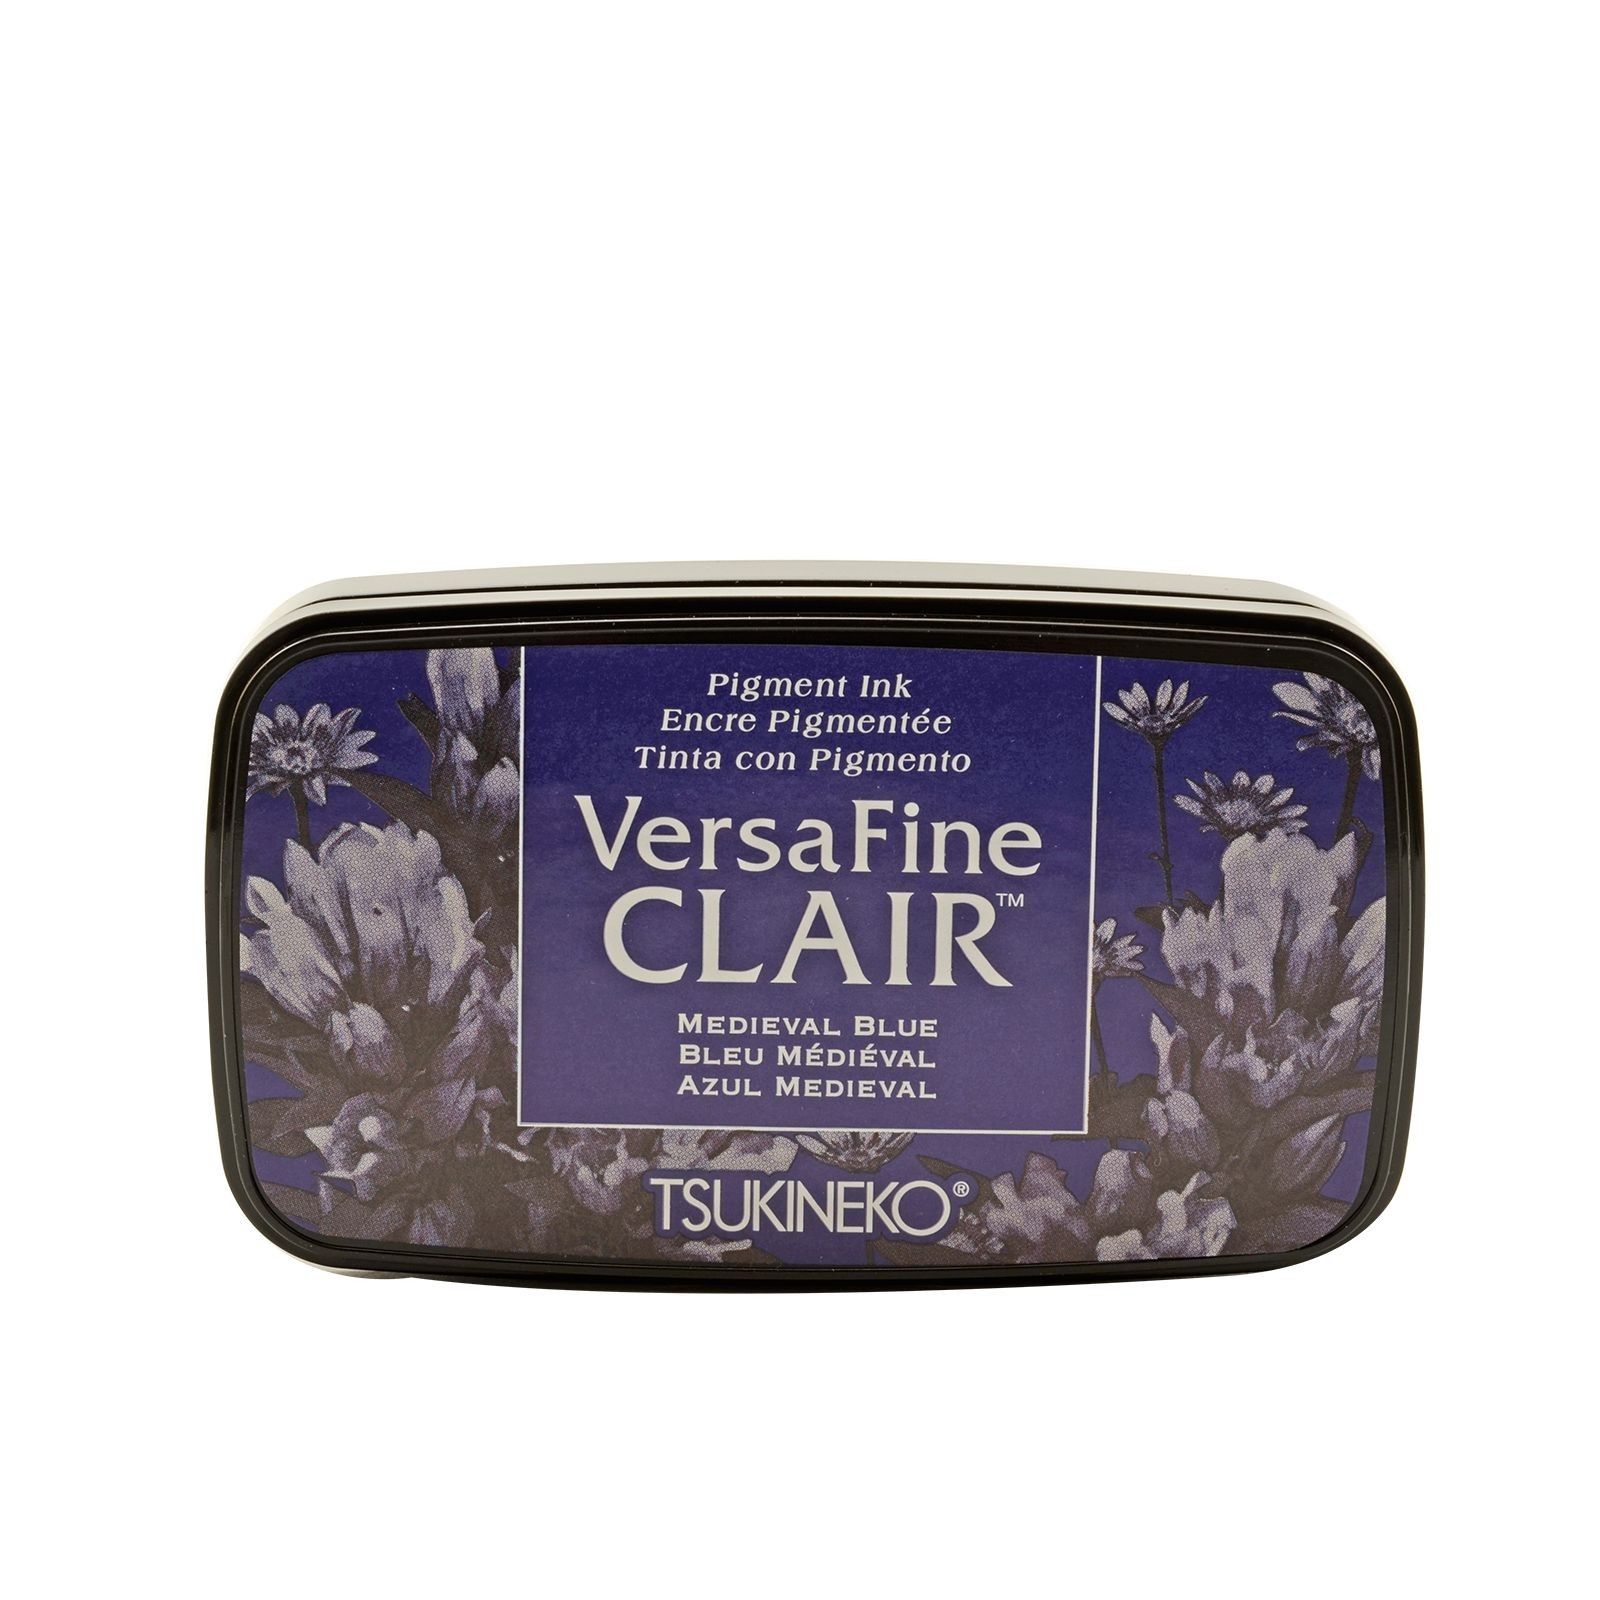 Medieval Blue - VersaFine Clair